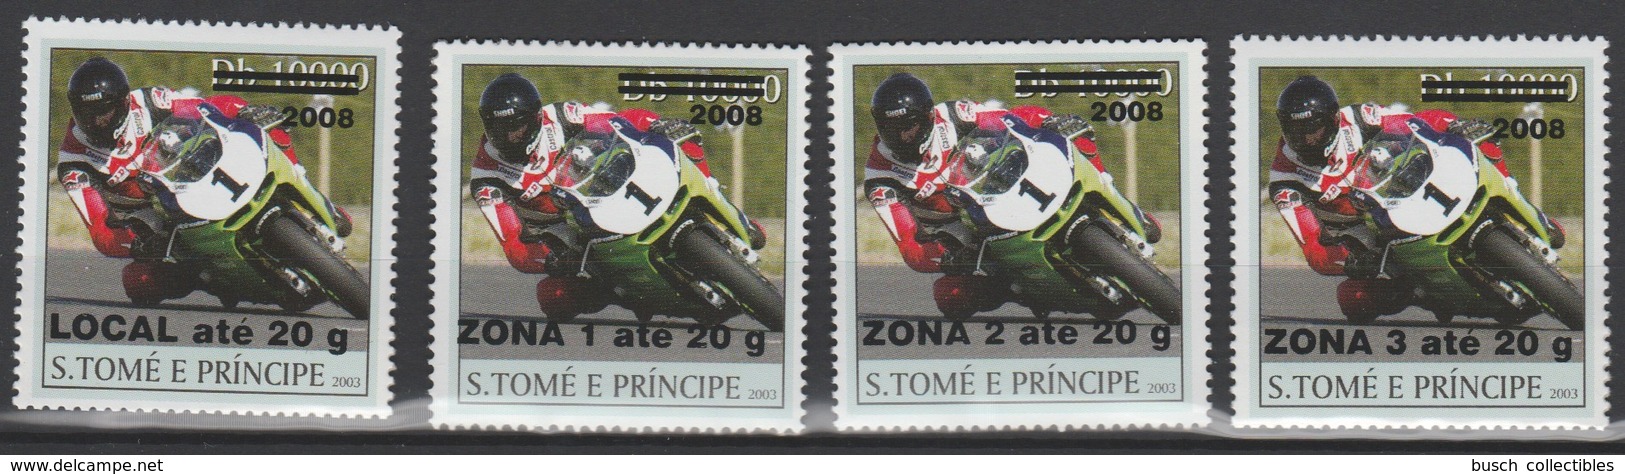 Sao S. Tomé & Principe 2008 / 2009 Mi. 4009-4015 Motorbike Motorrad Moto 4 Val. - Motos